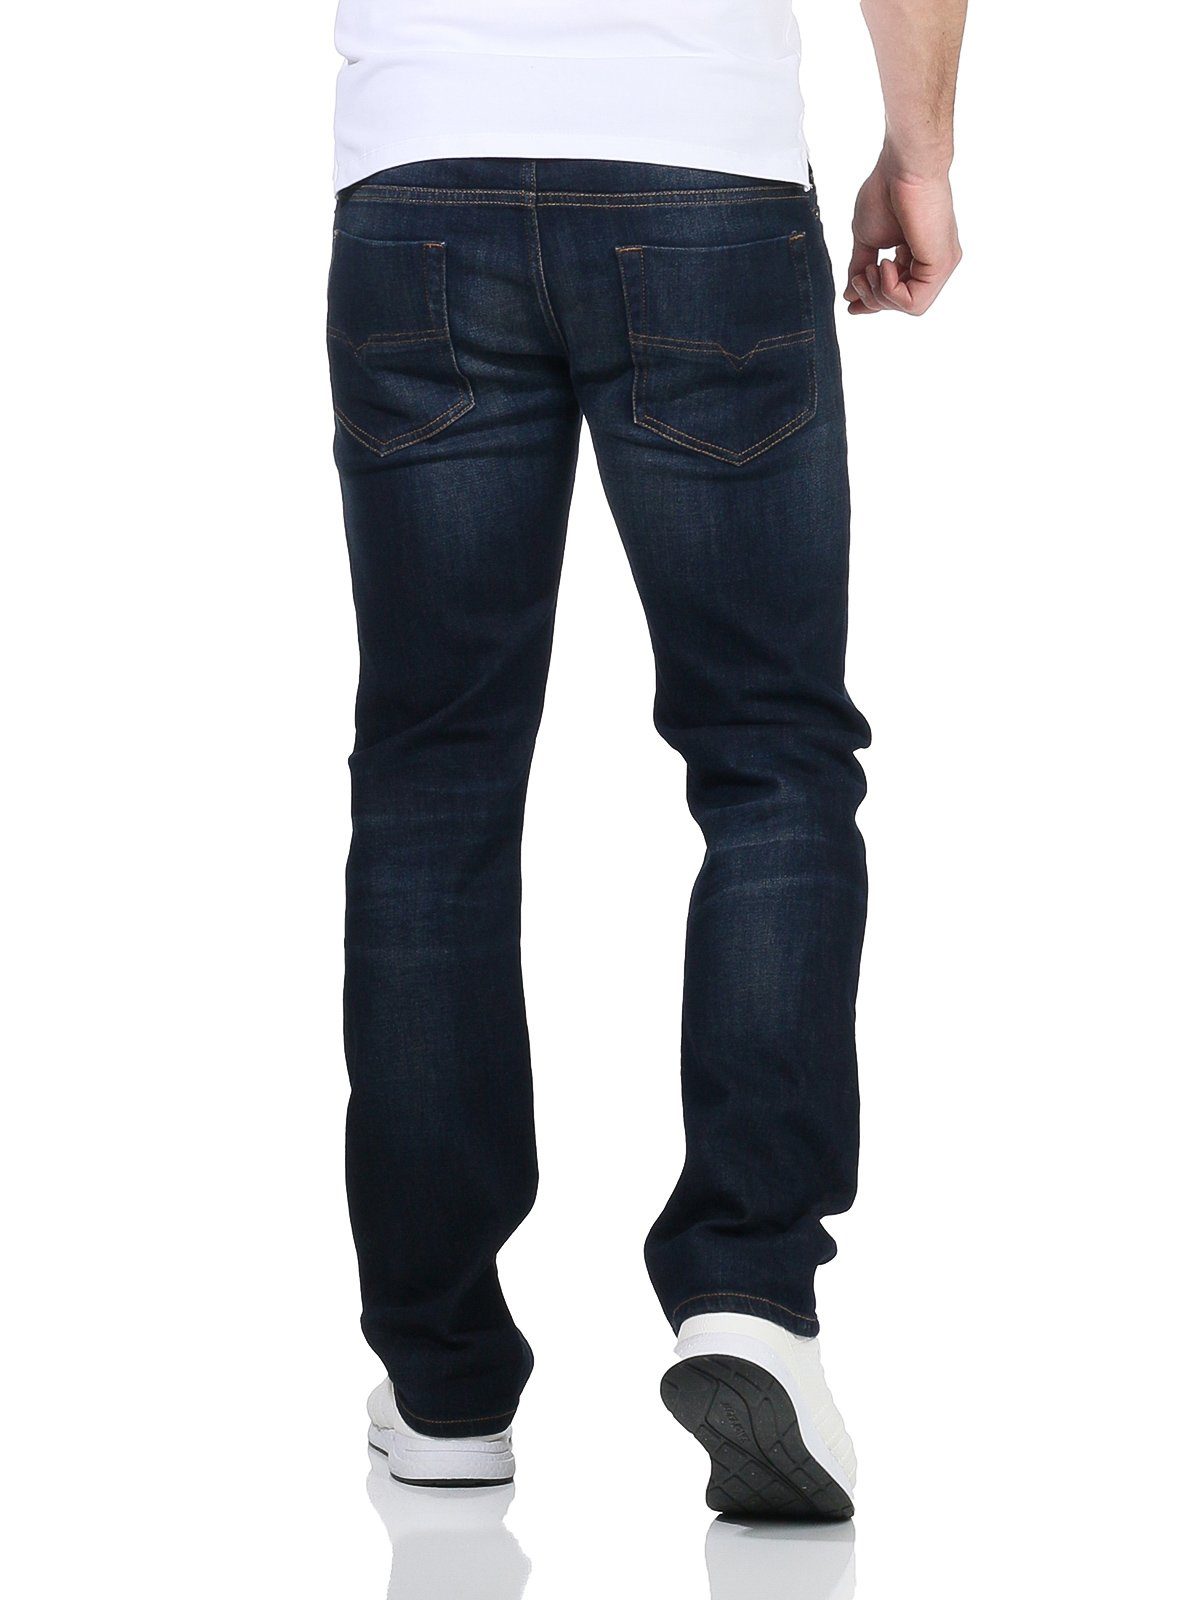 5 0890Z - Diesel Pocket Style, SAFADO-X Diesel Used-Look Herren Dezenter Stretch-Jeans Stretch-Jeans